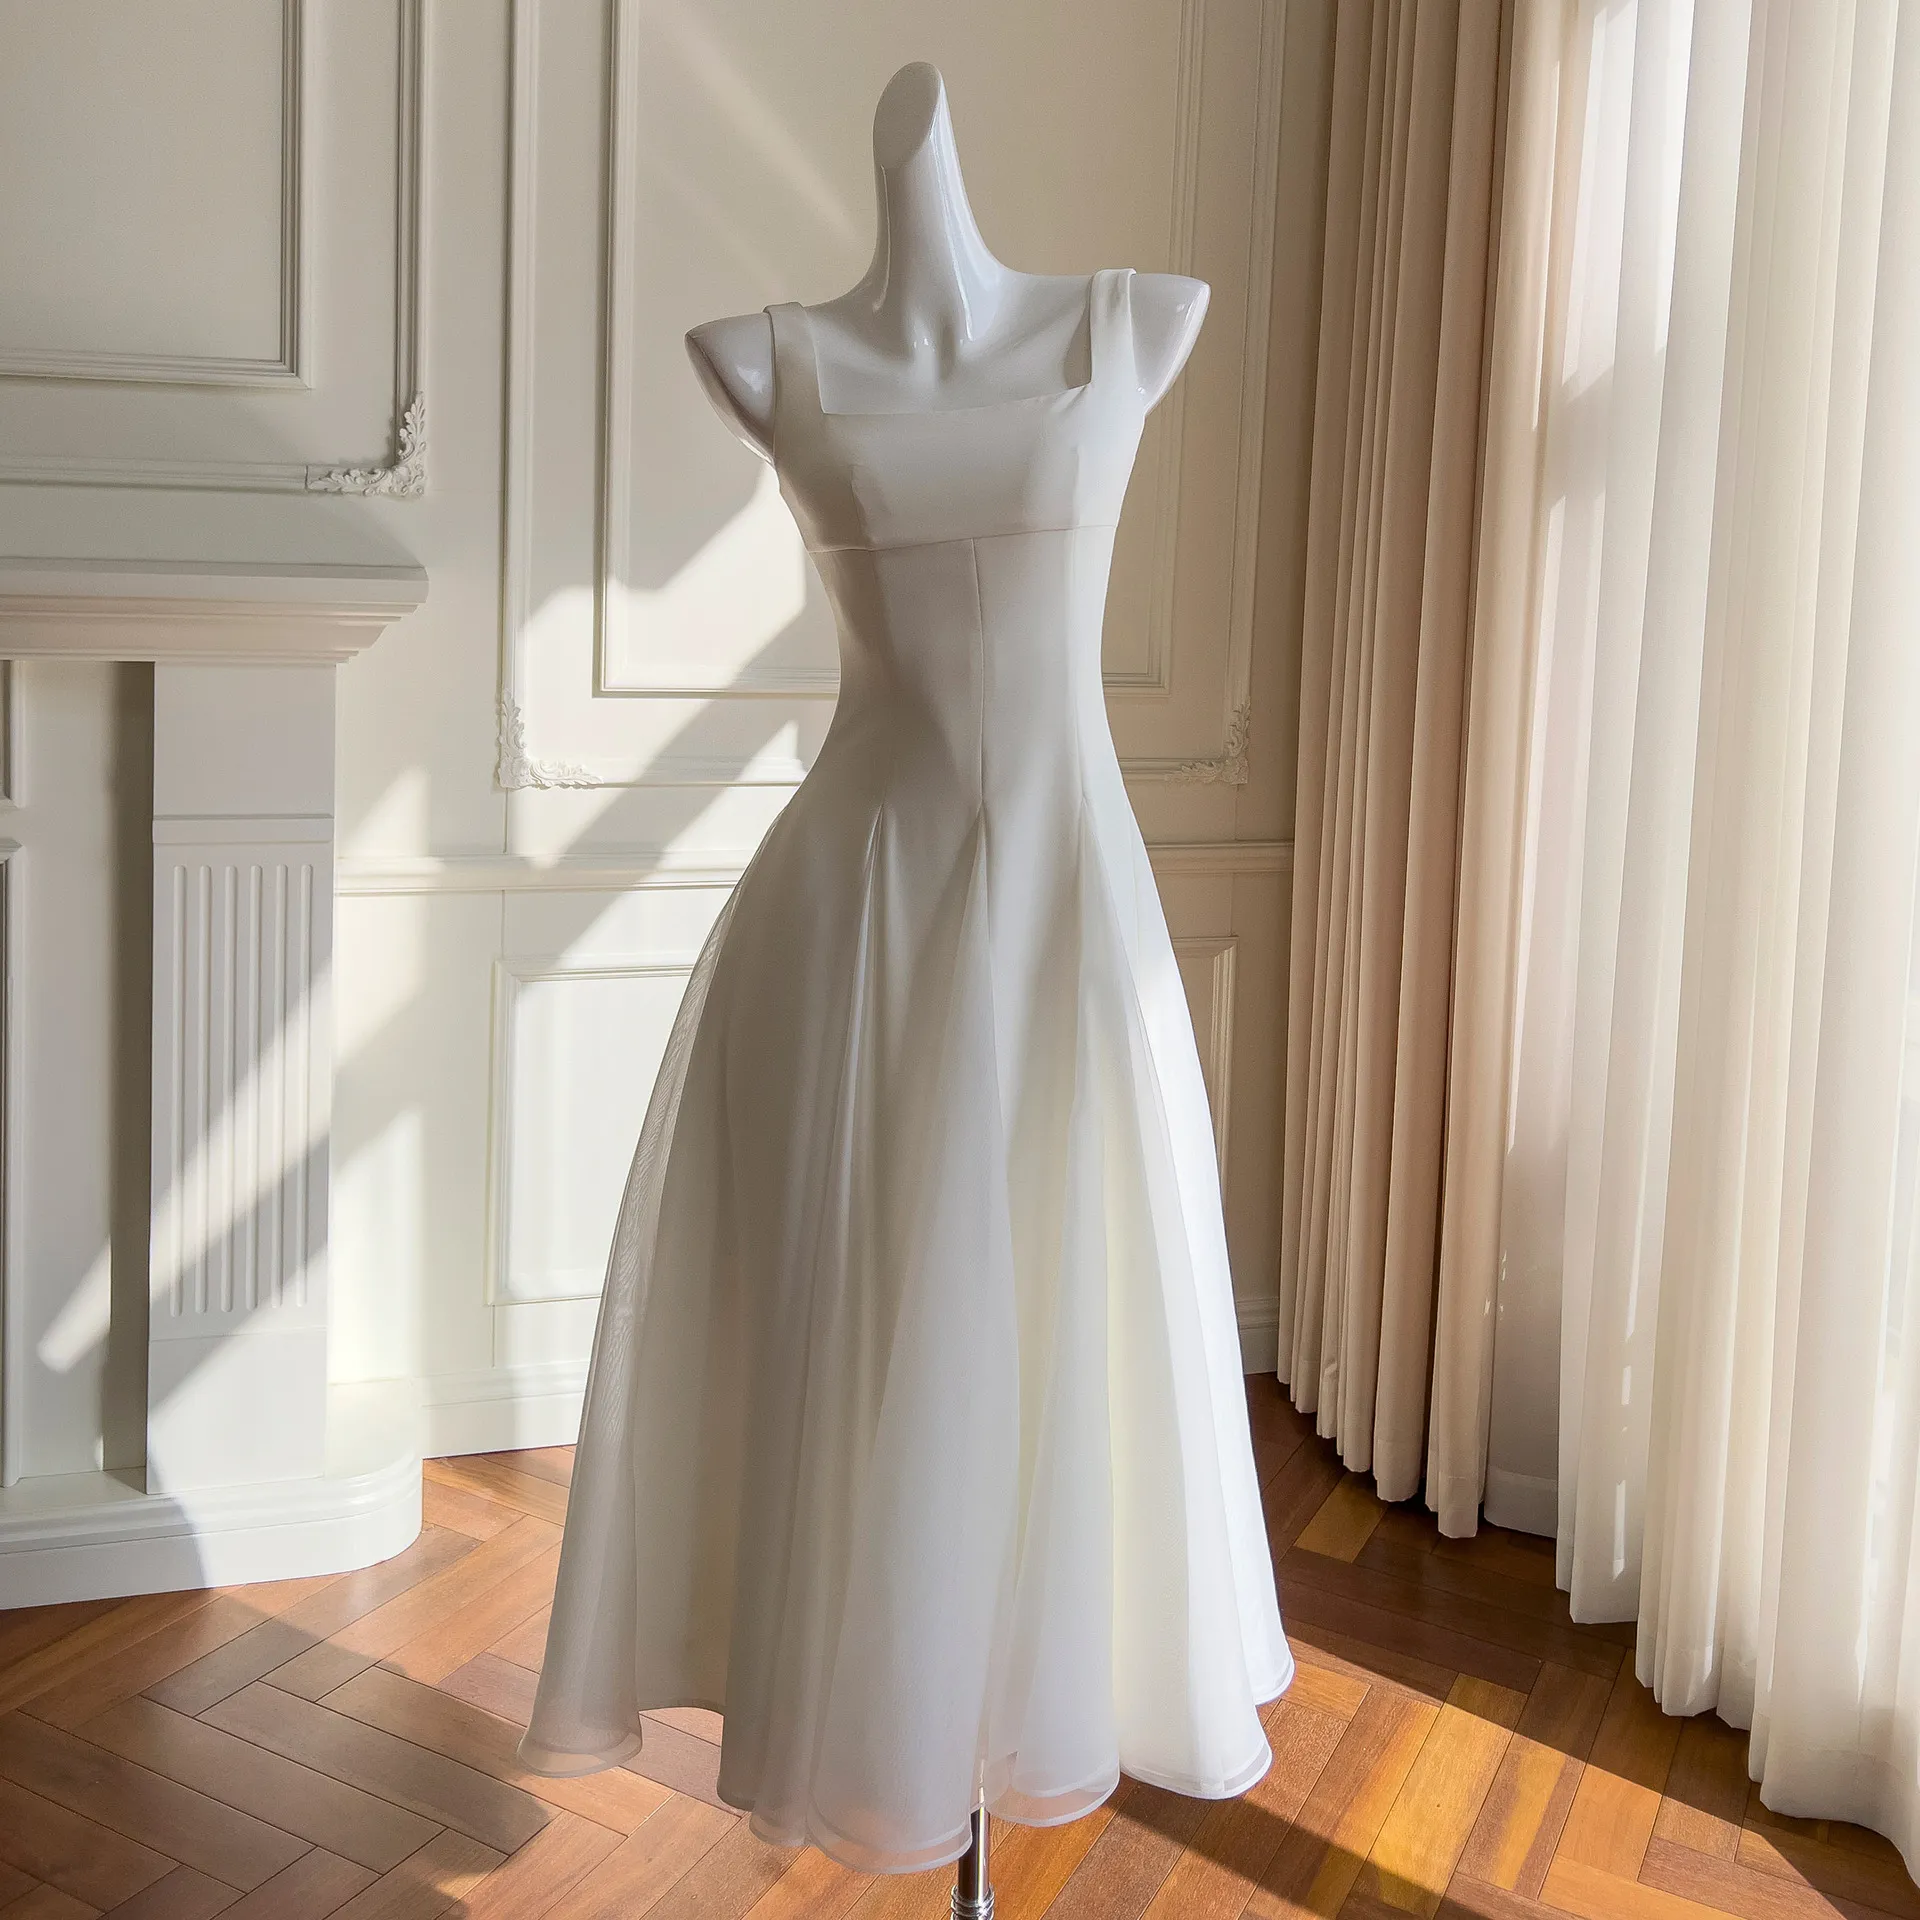 White camisole dress, gentle temperament, small white dress, French socialite style, slim fit, waistband, sleeveless long skirt 68462